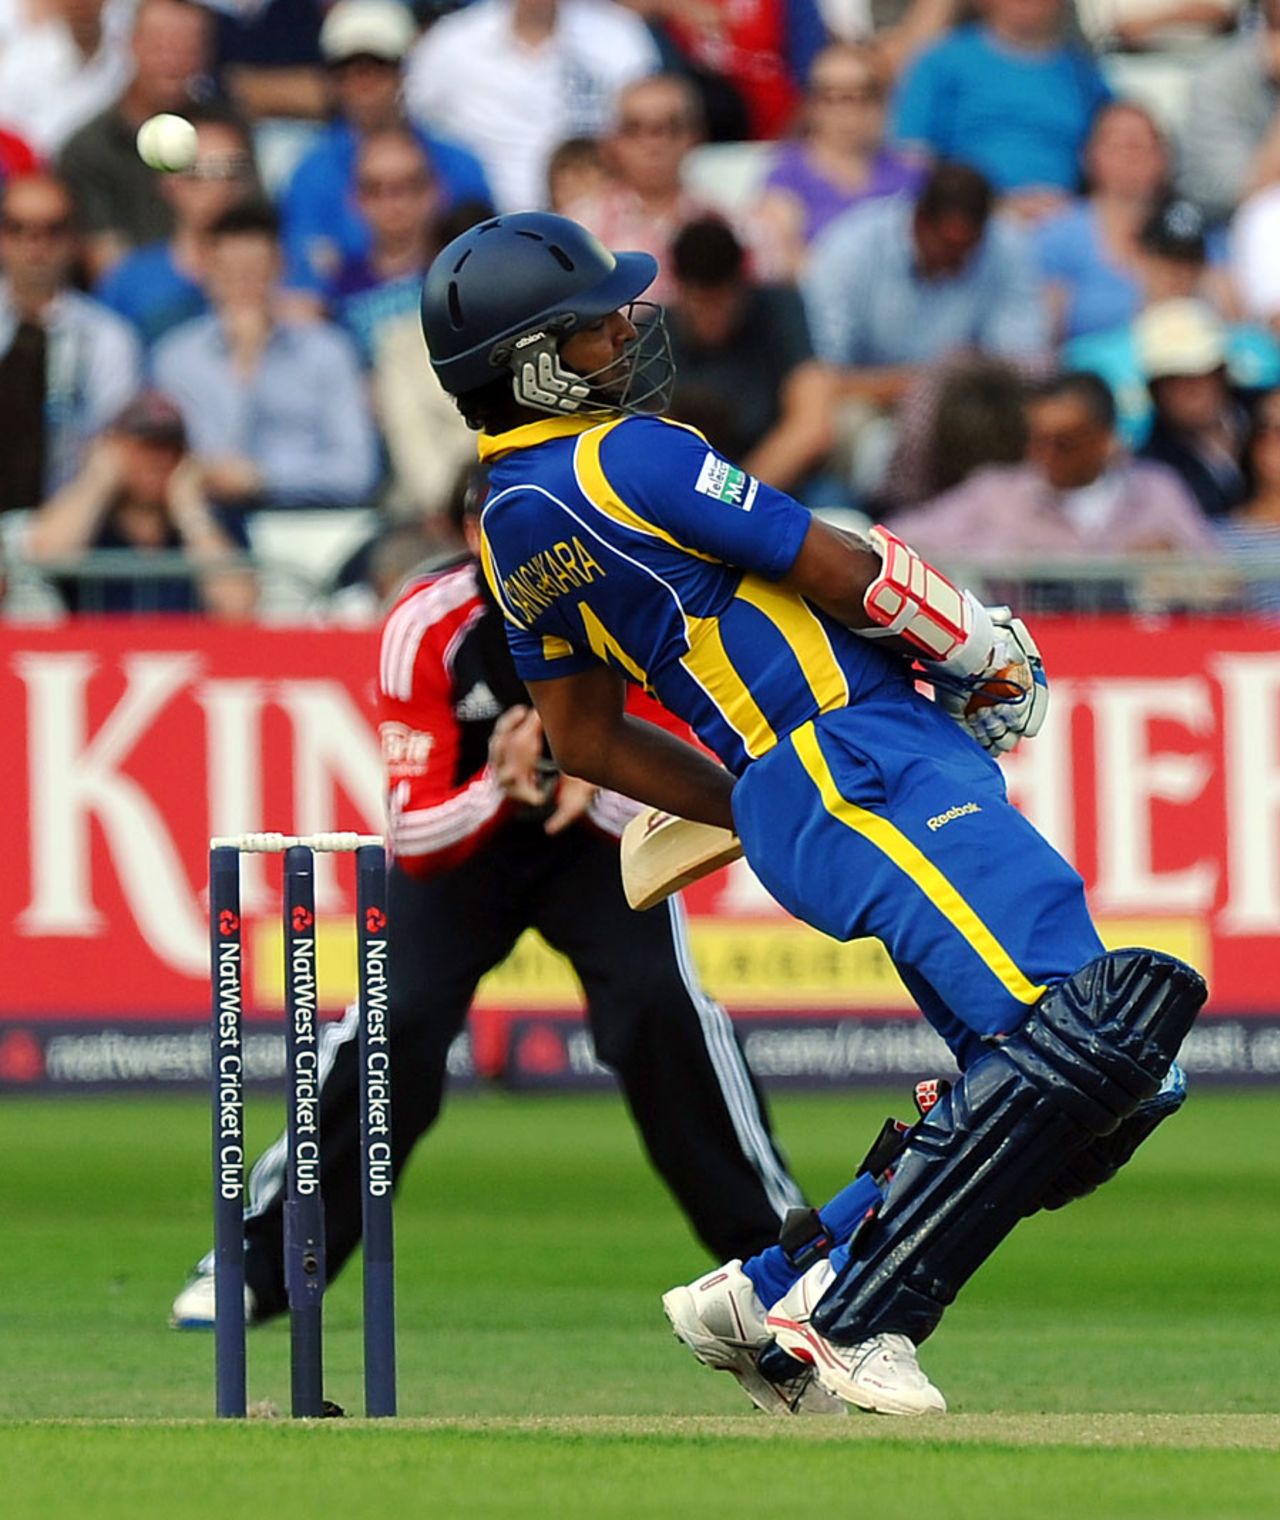 Kumar Sangakkara had to battle hard in tough conditions, England v Sri Lanka, 4th ODI, Trent Bridge, July 6 2011